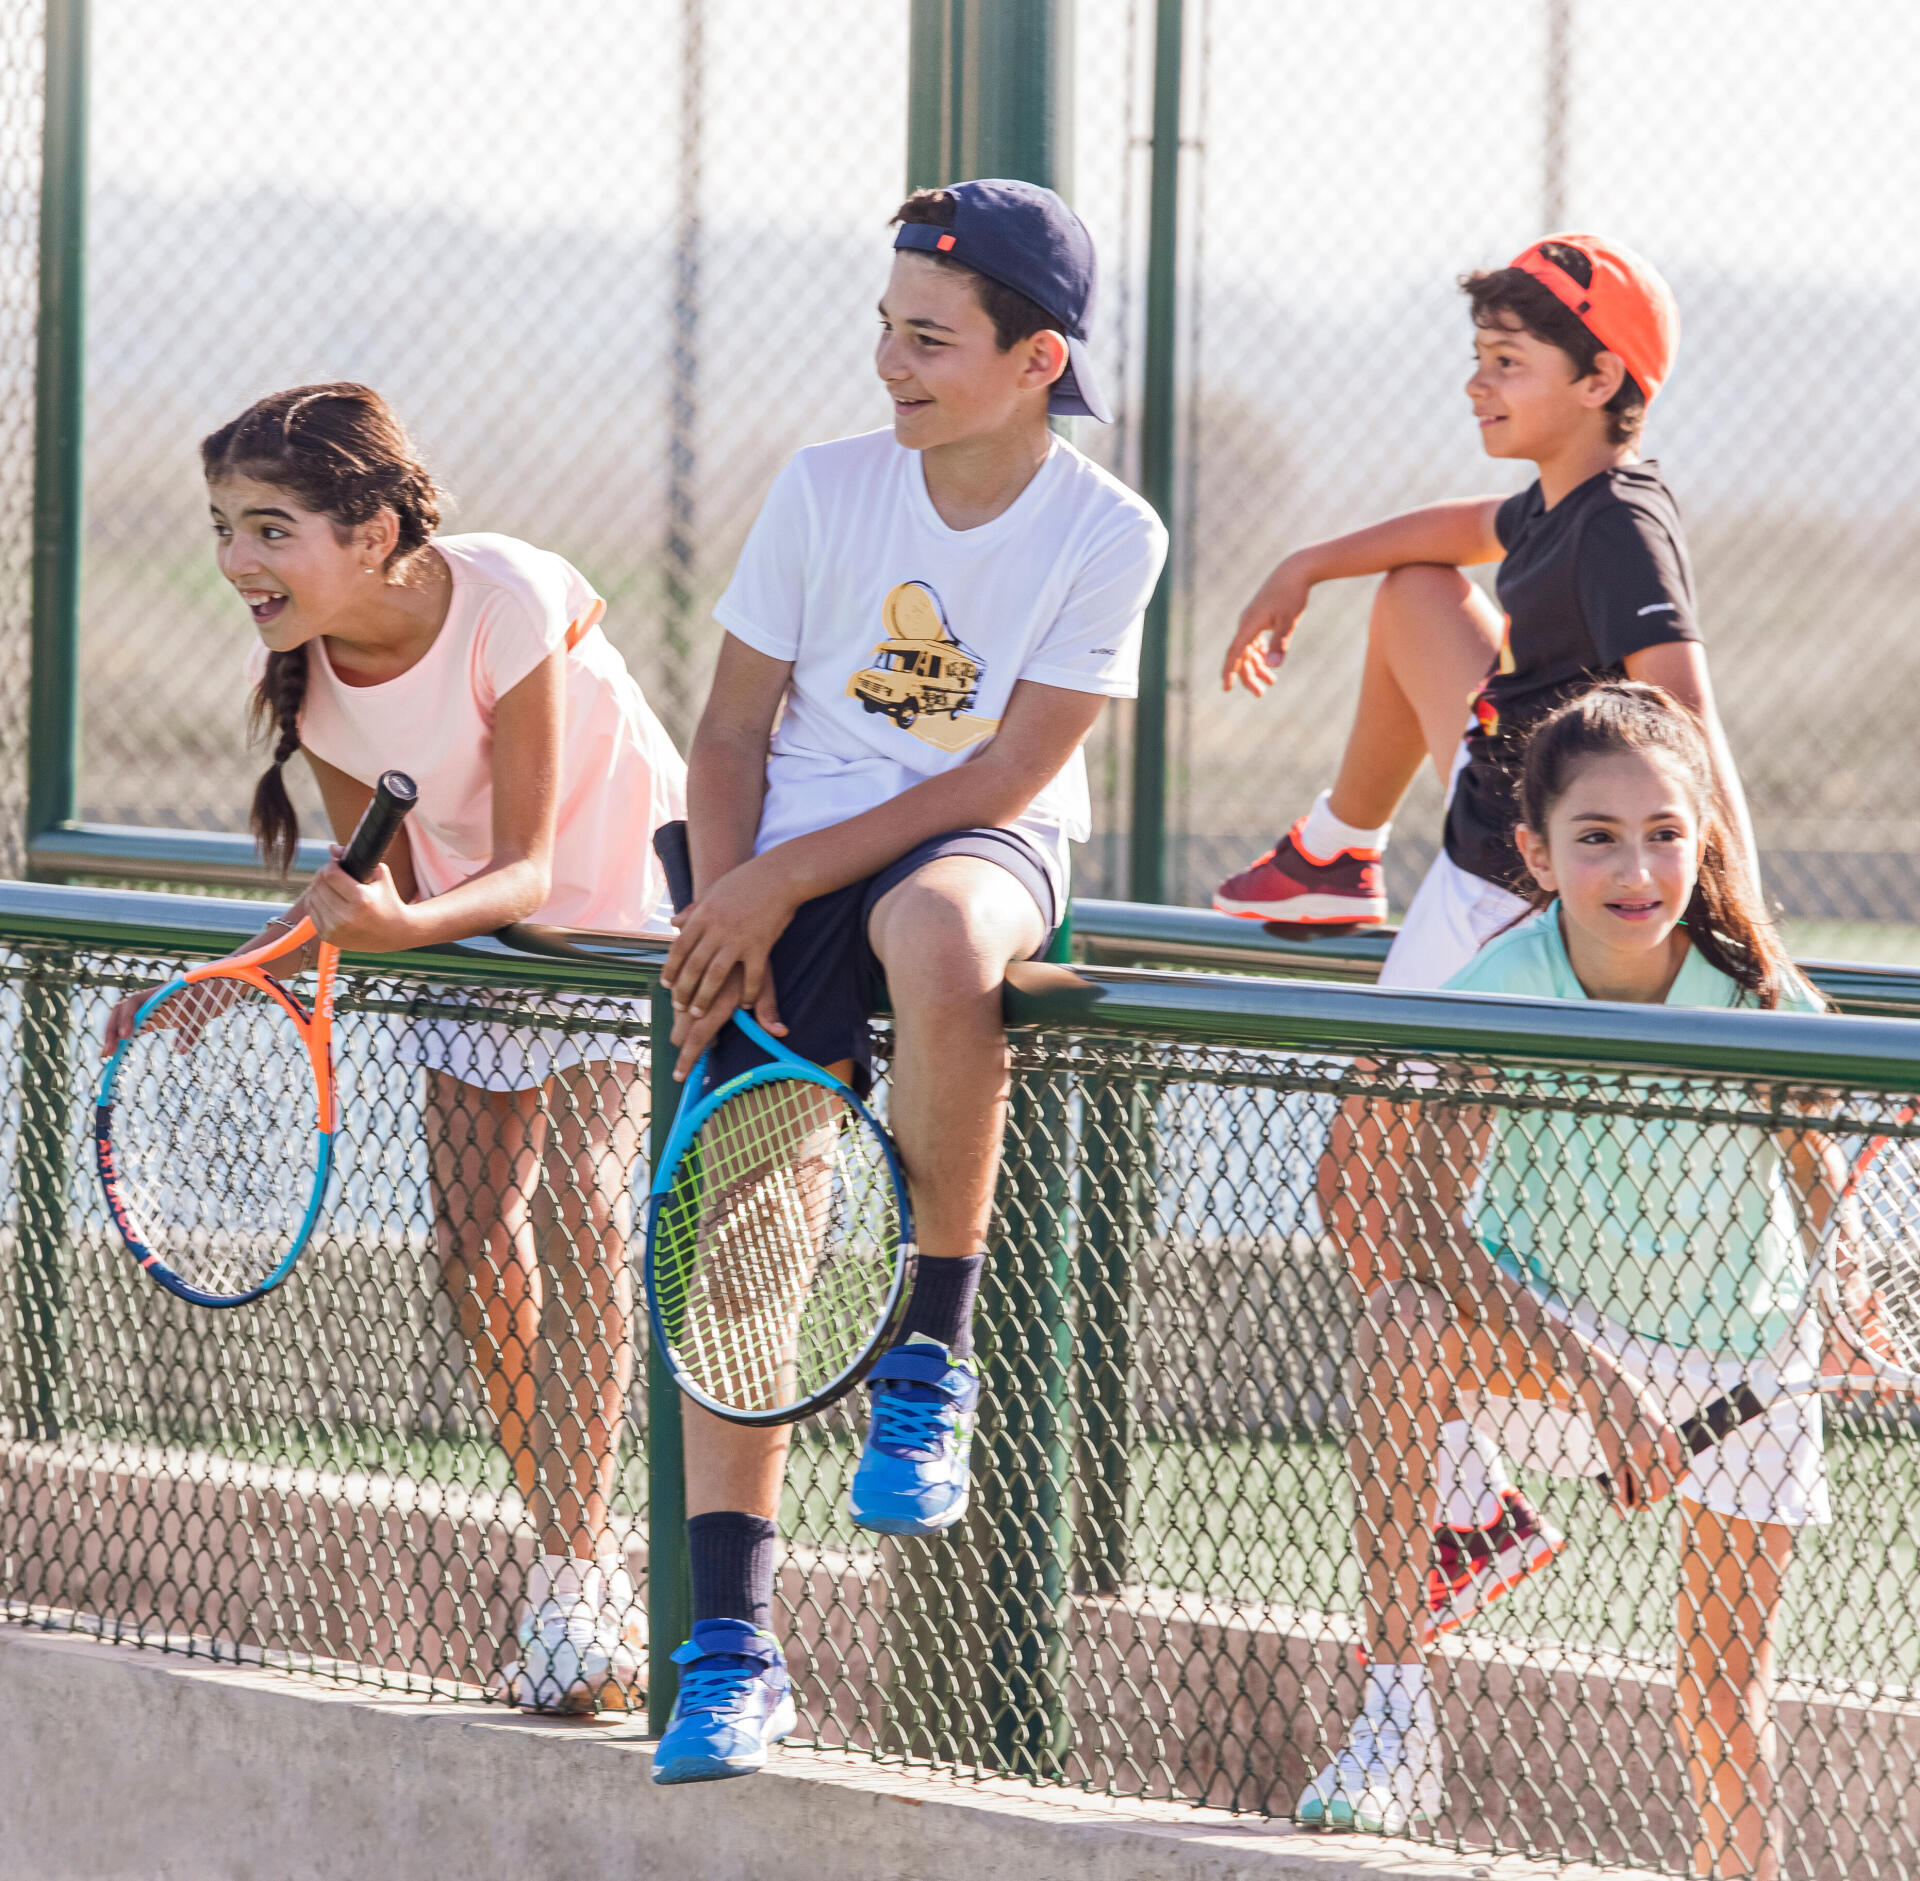 Tennis social sport